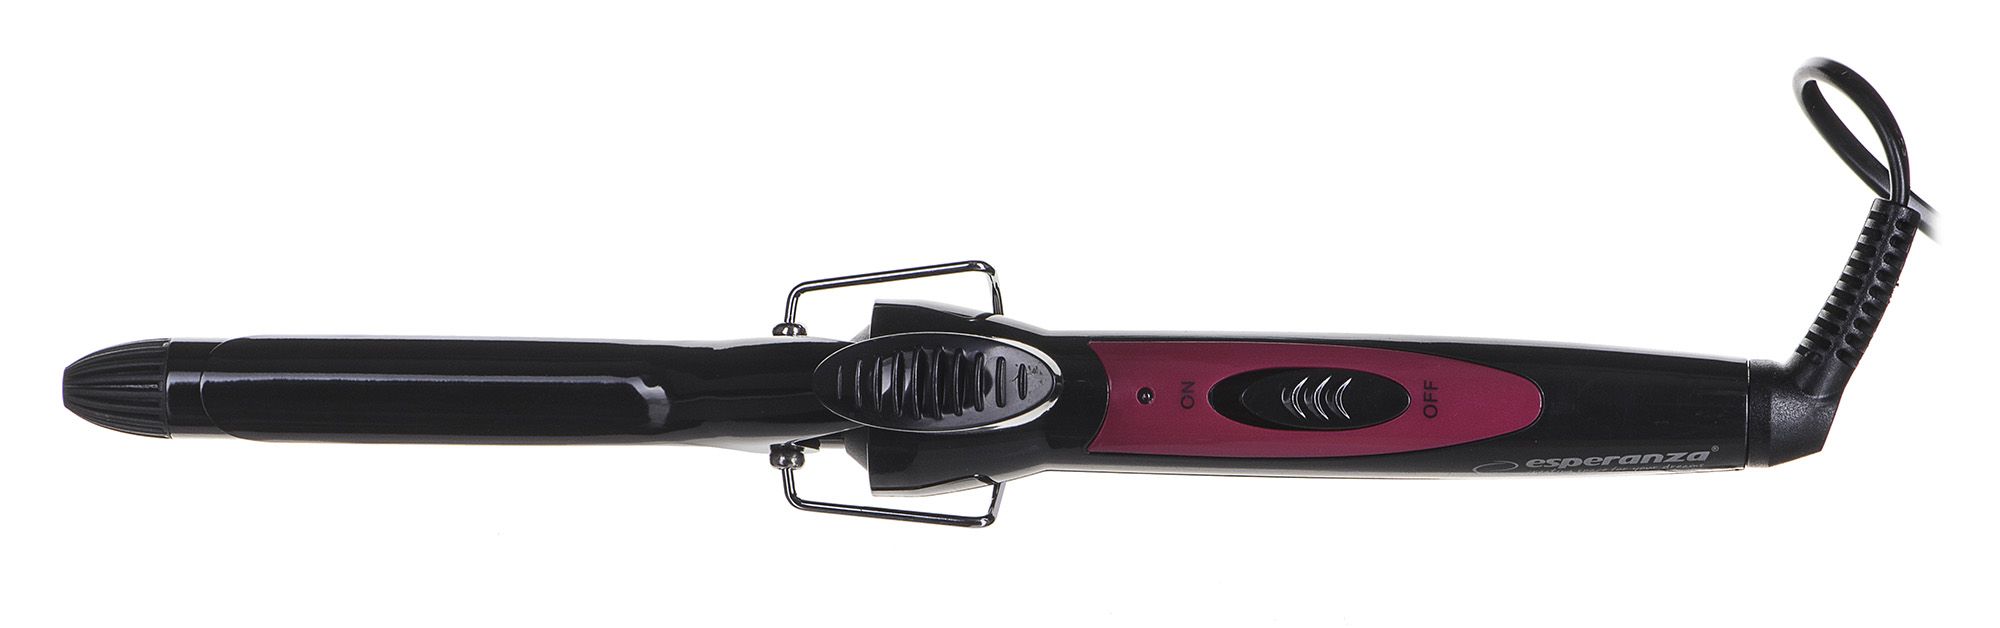 Esperanza EBL004 hair styling tool Curling iron Black 1.7 m 25 W_5